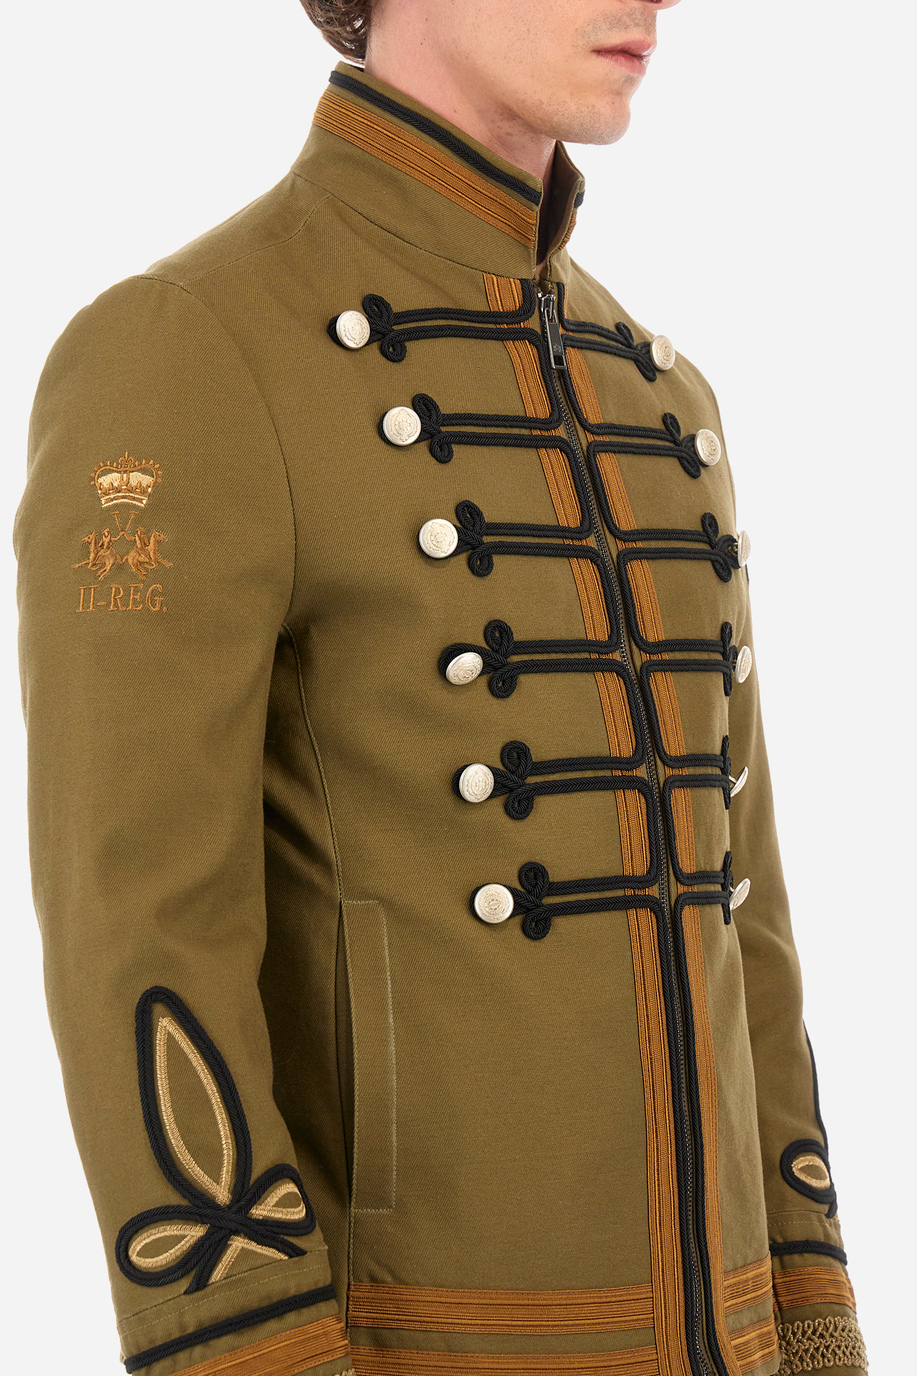 Regular-fit Guards jacket in cotton - Yefim - Spring looks for him | La Martina - Official Online Shop